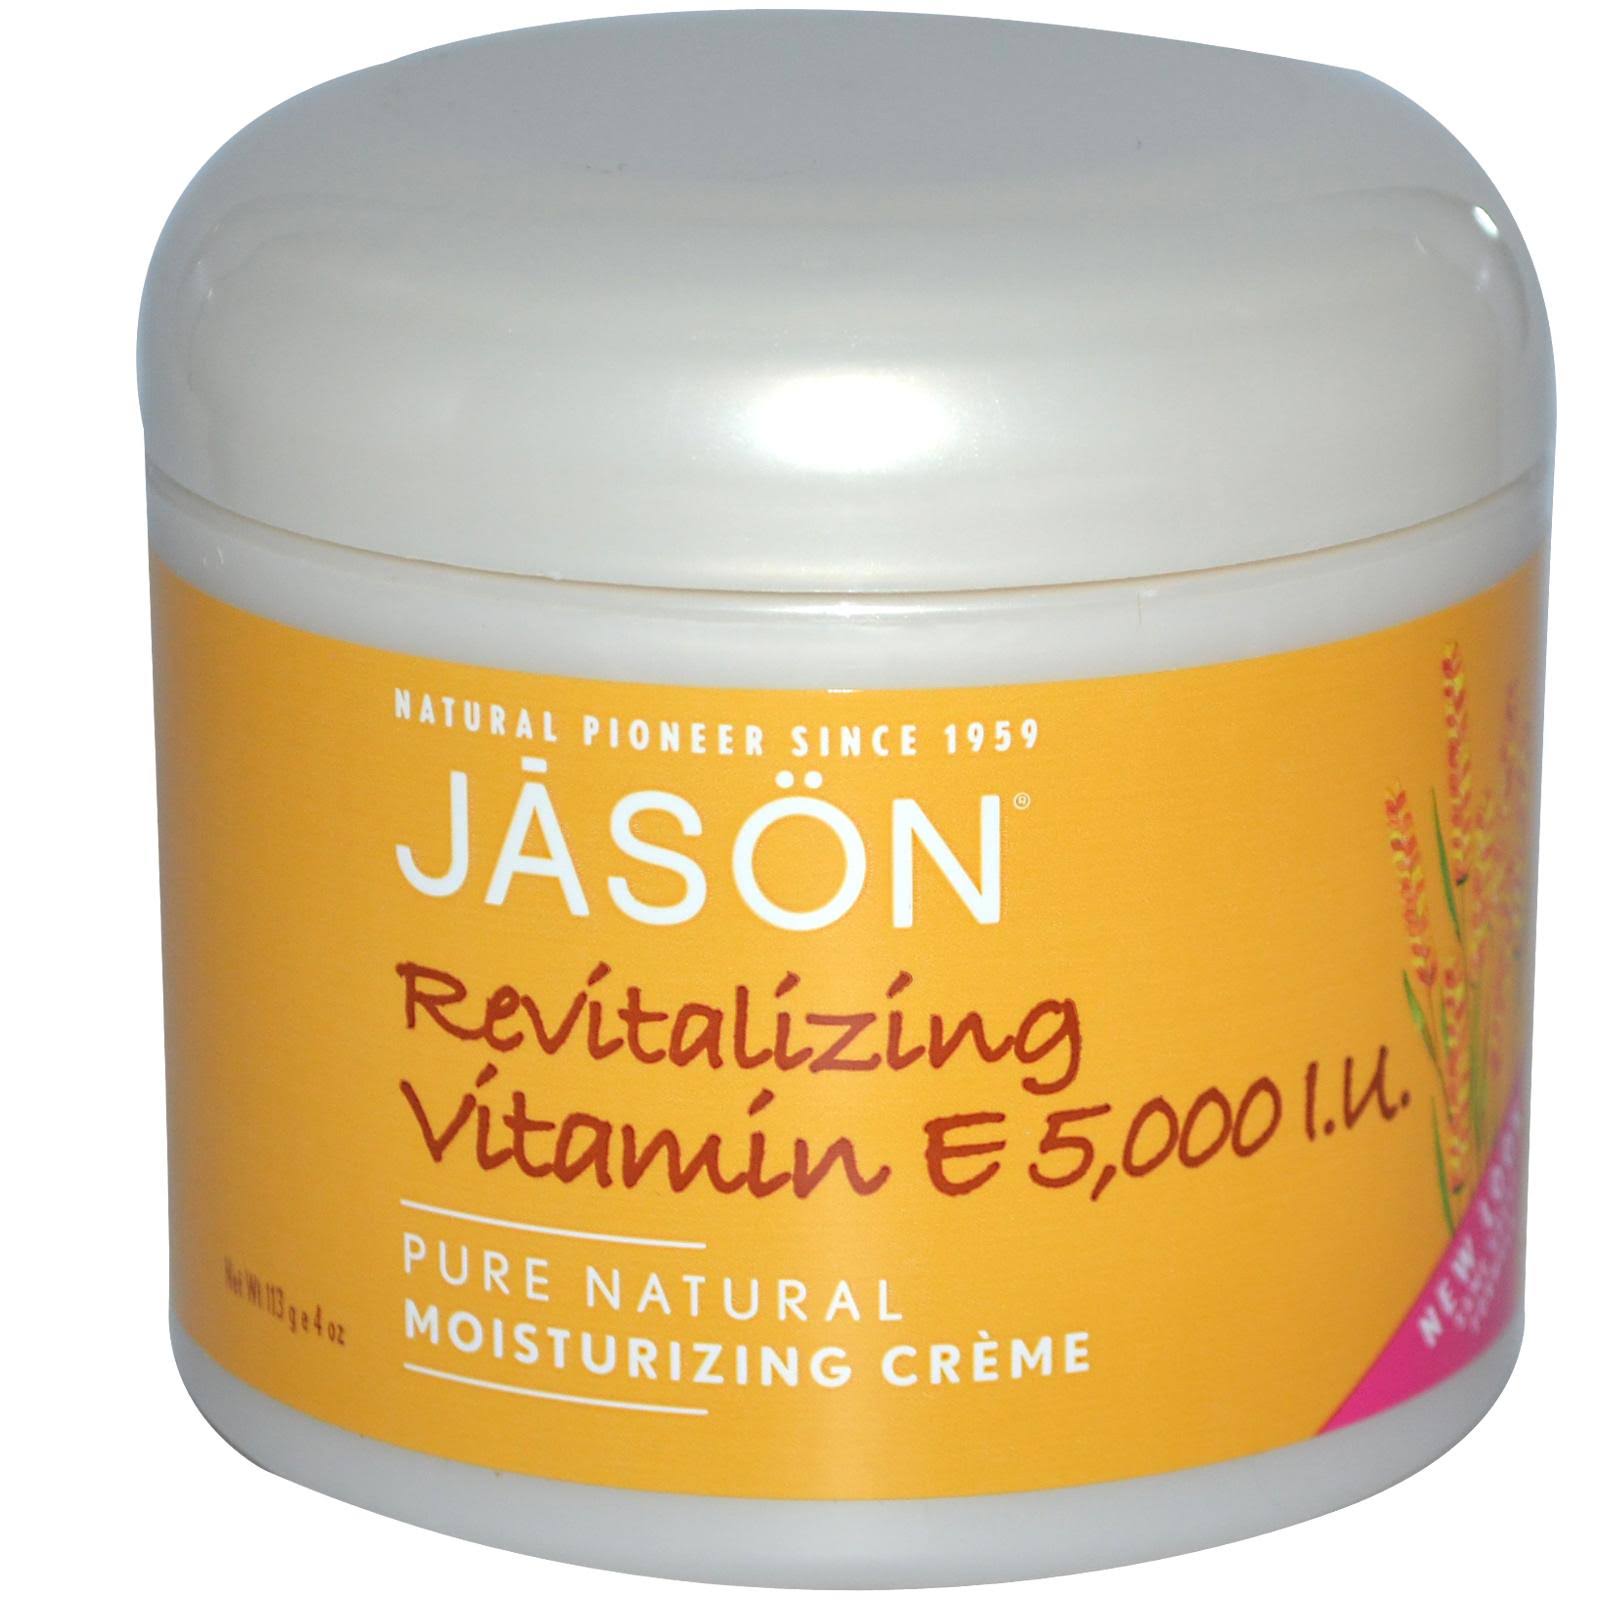 Jason Vitamin E Revitalizing Moisturizing Creme - 5,000 IU